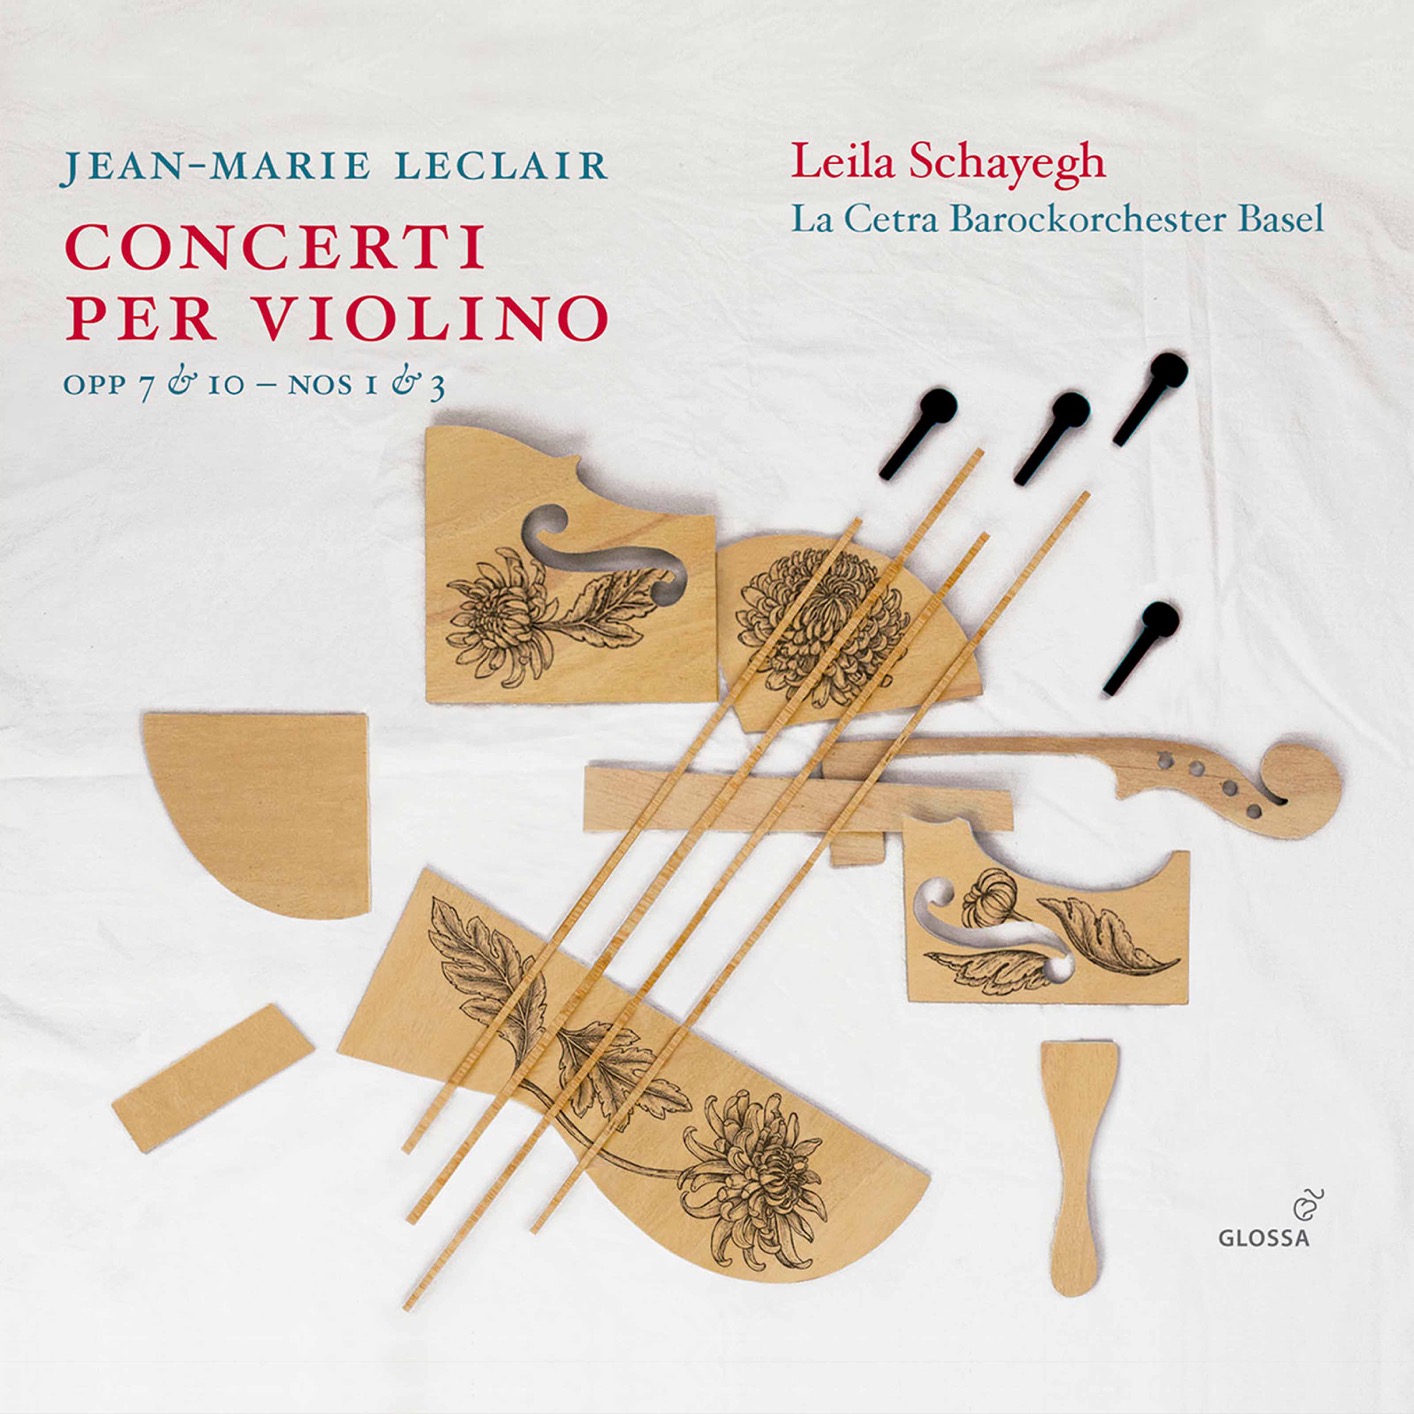 La Cetra Barockorchester Basel & Leila Schayegh – Leclair: Violin Concertos, Vol. 2 (2020) [FLAC 24bit/96kHz]